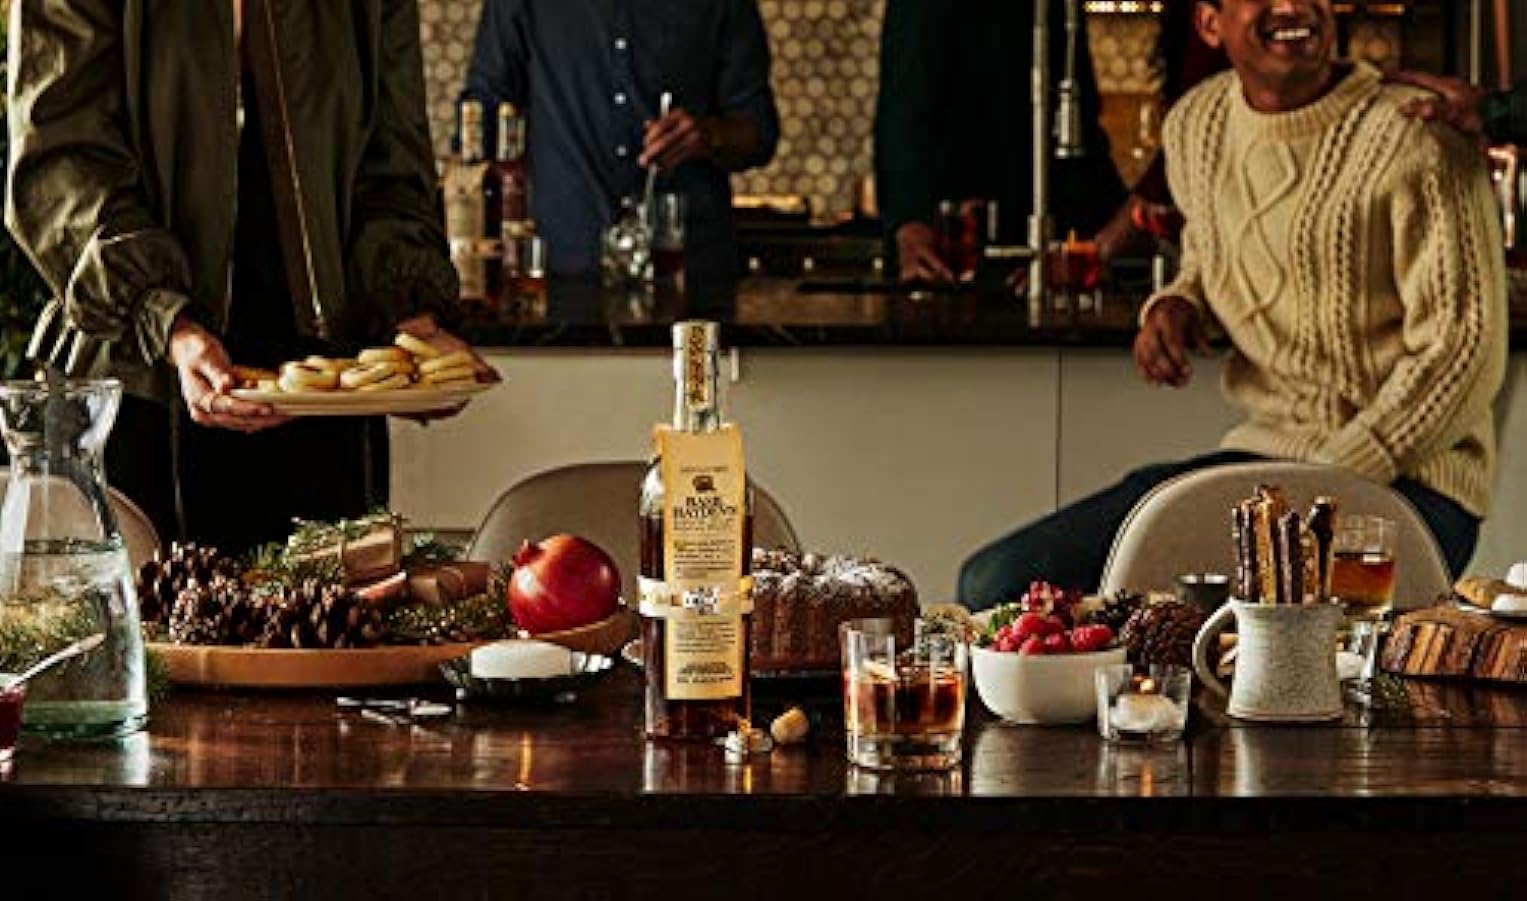 Basil Hayden´s Kentucky Straight Bourbon Whiskey 40% Vol. 0,7l 505116245